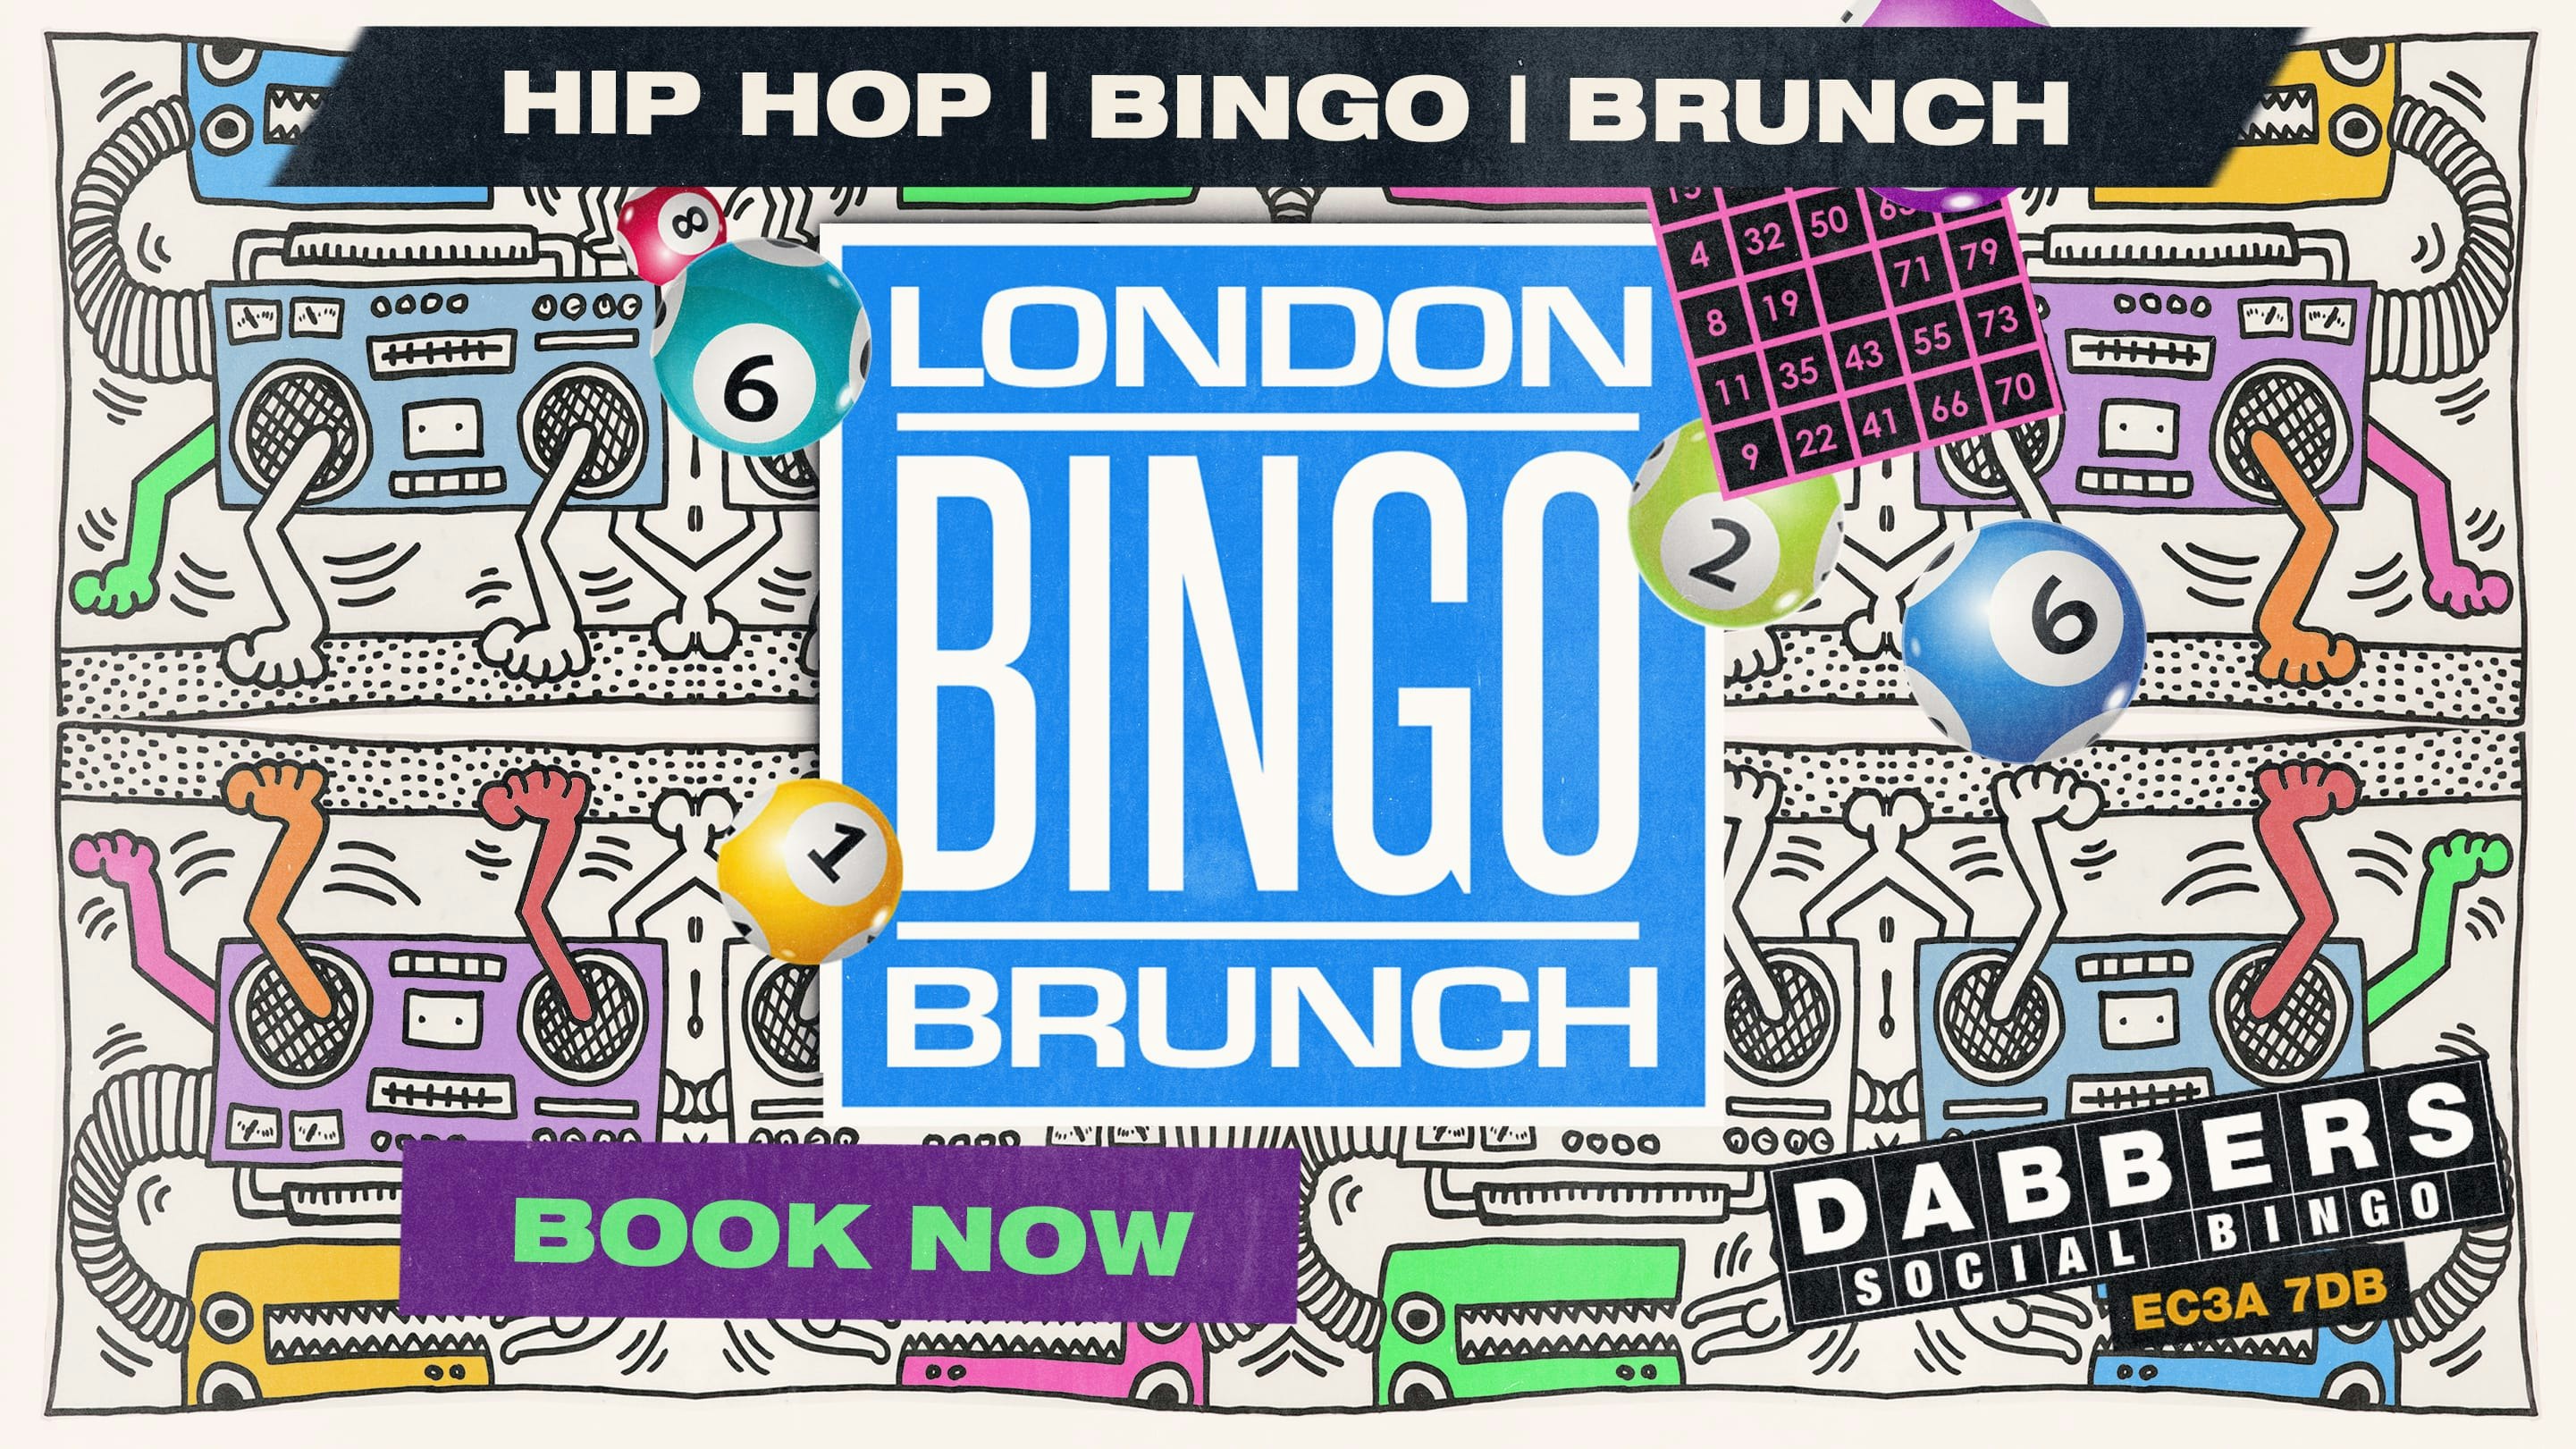 London Bingo Brunch: The All Day Hip Hop Bingo & Brunch Party!